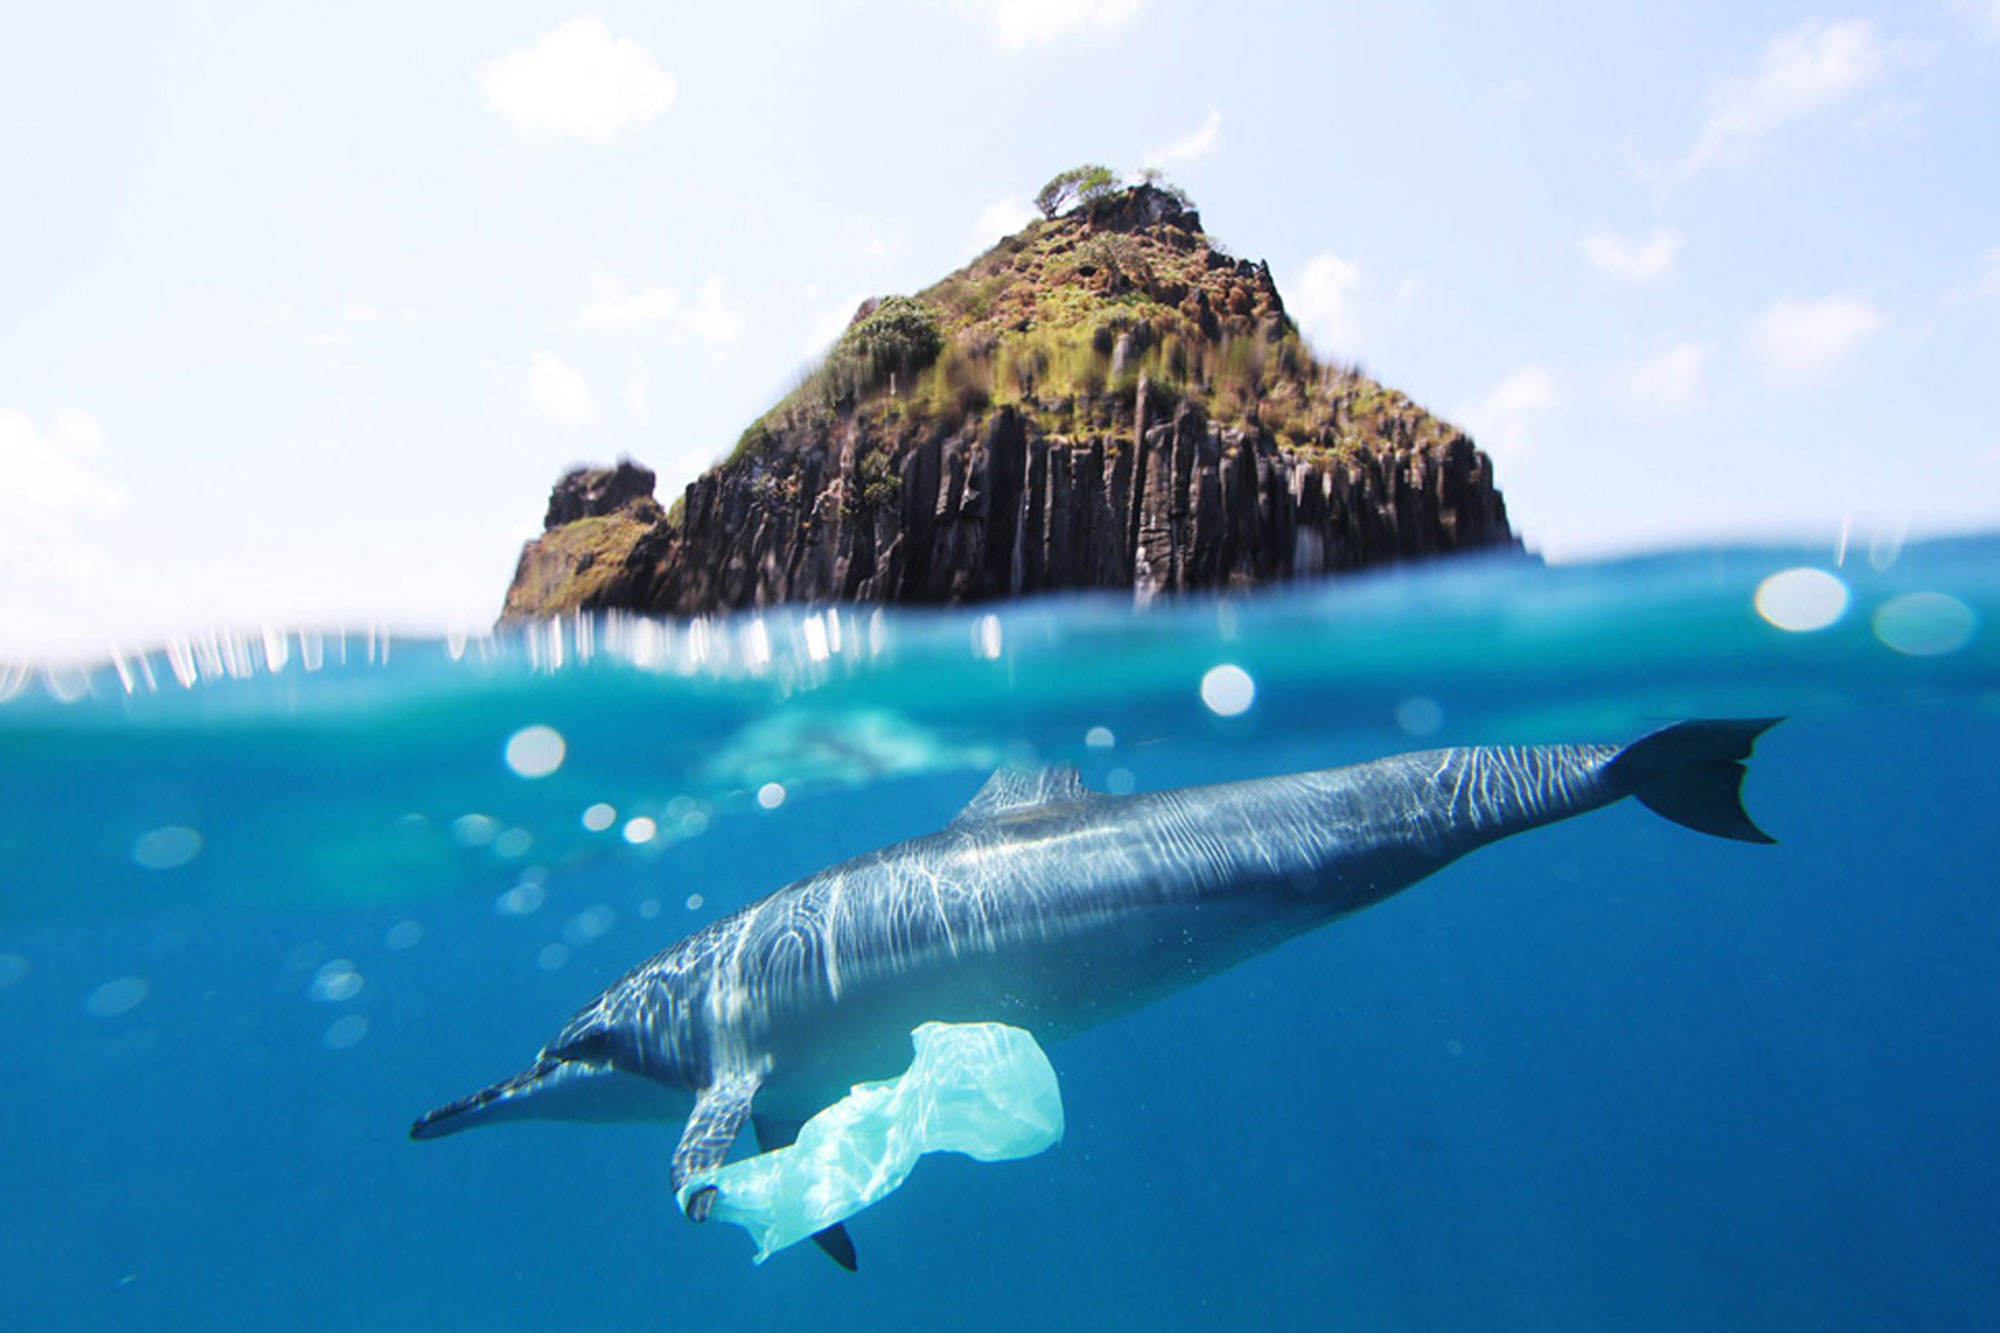 Dolphin ensnared in plastic bag at Fernando de noronha